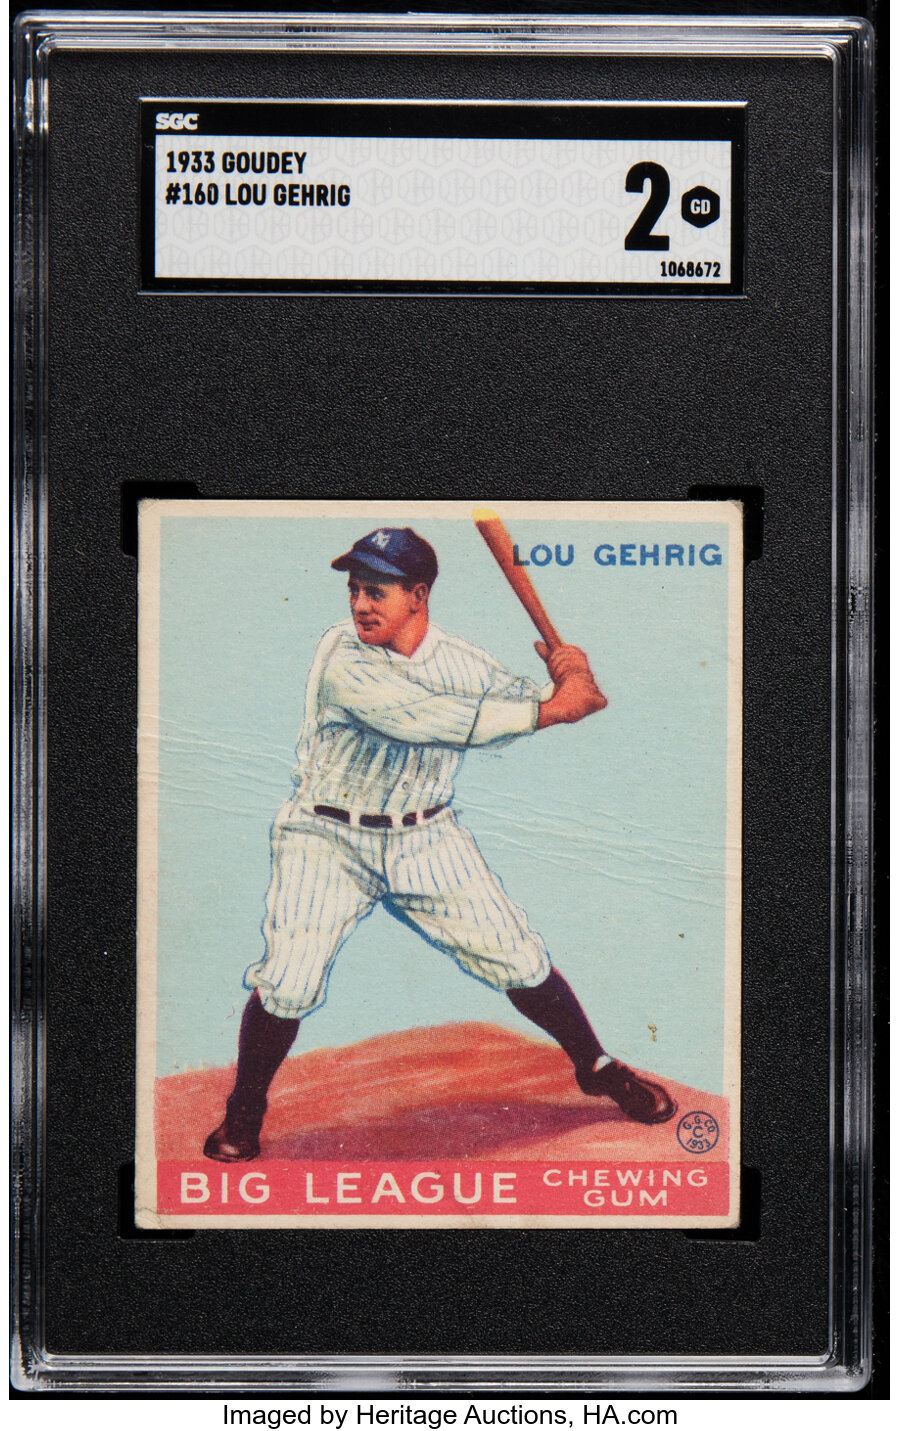 1933 Goudey Lou Gehrig #160 SGC Good 2